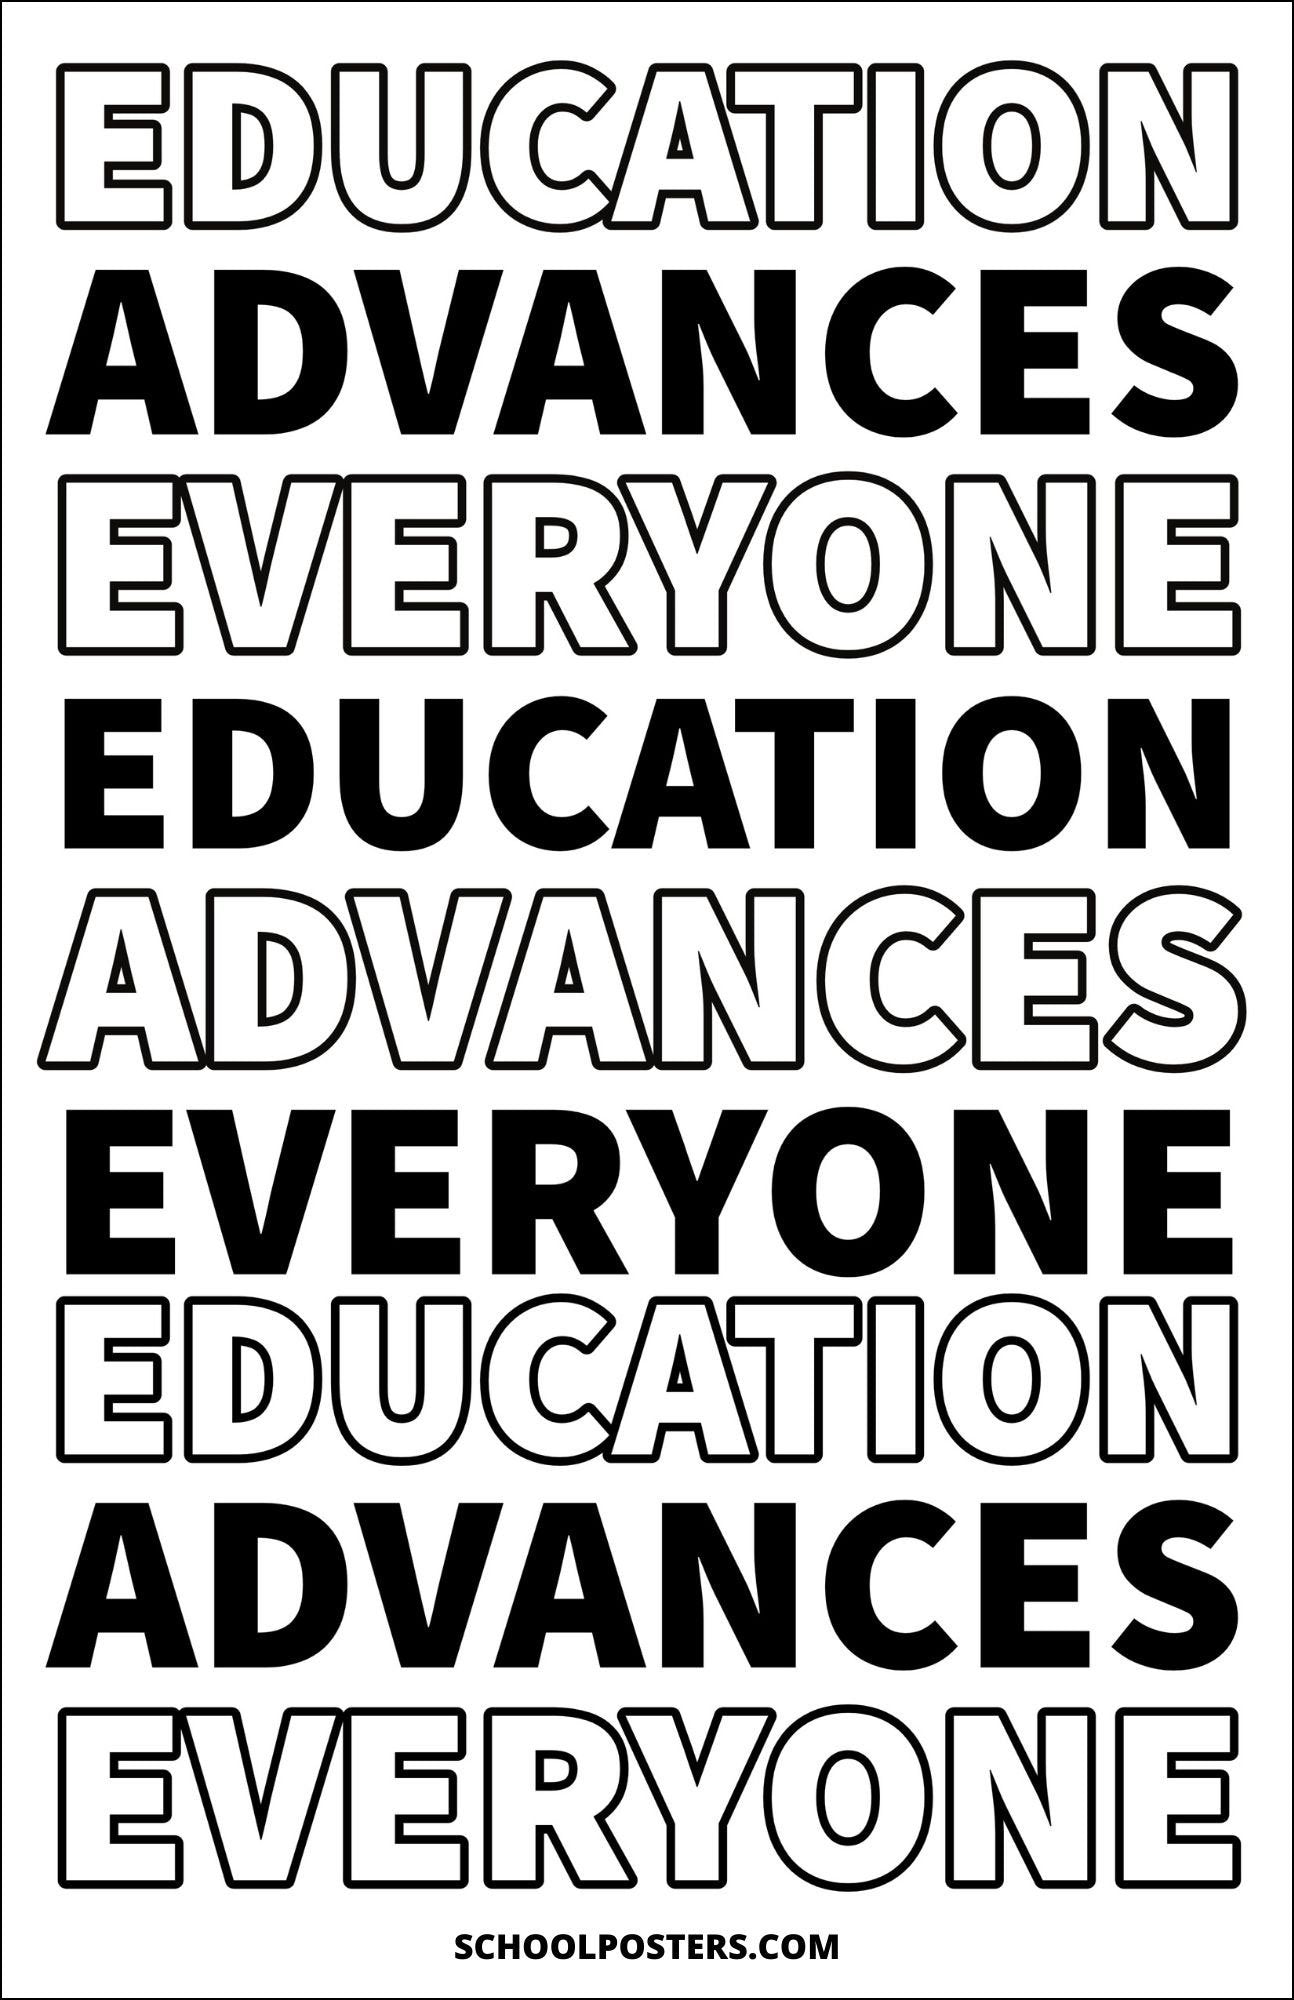 Education Advances Everyone Poster